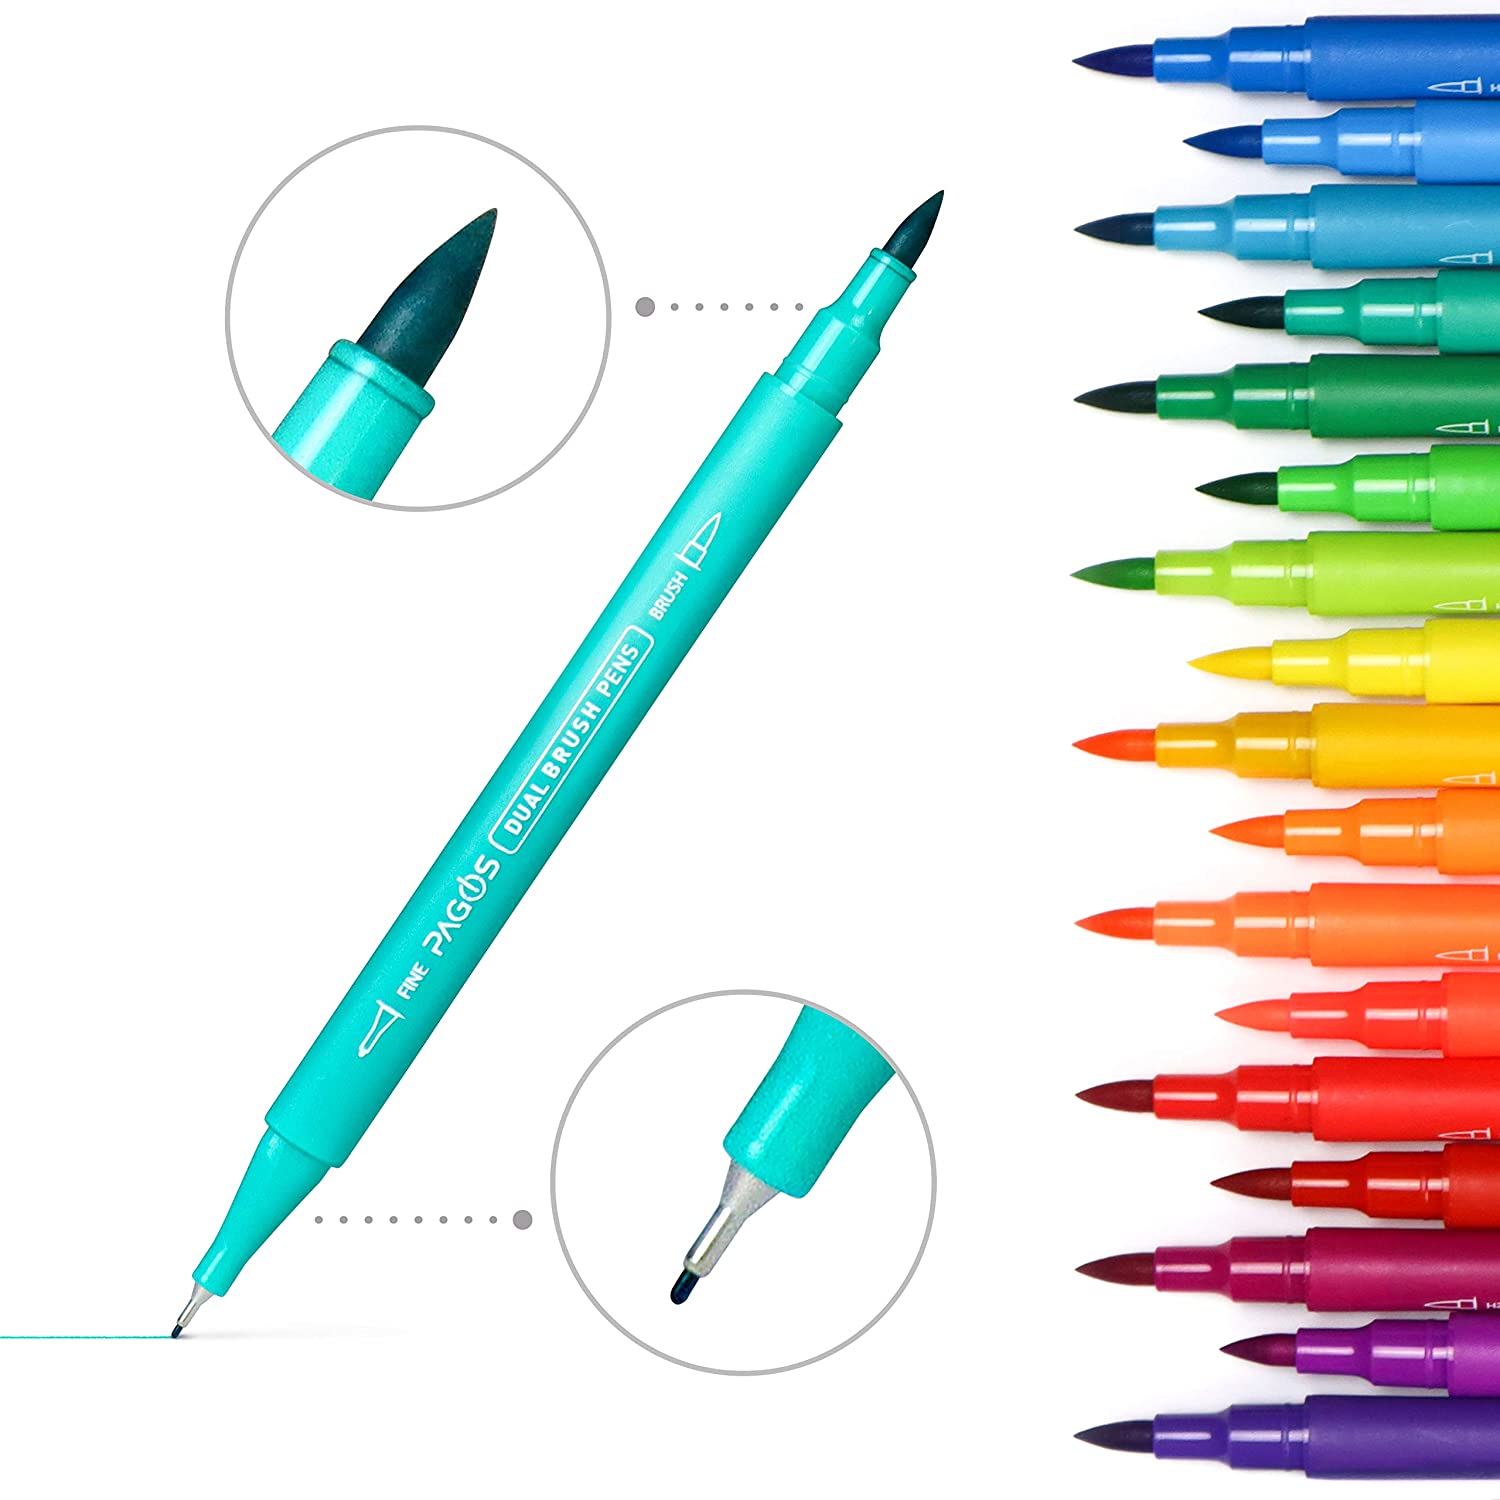 Watercolor Dual Brush Pens 80 Pieces Set